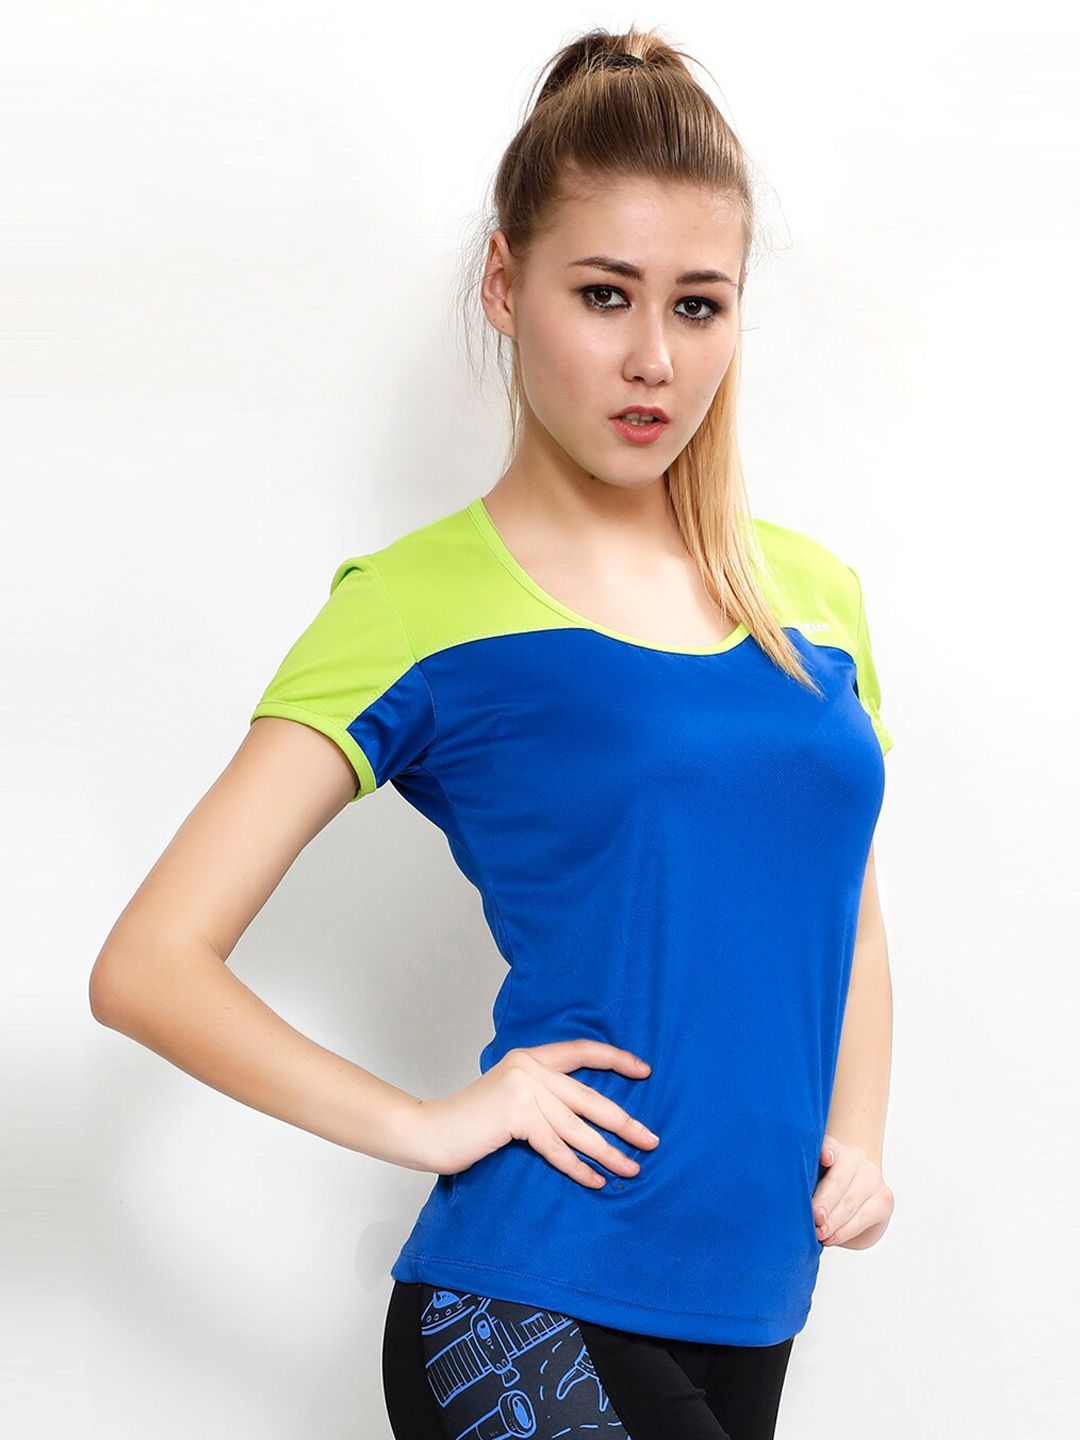 Yogue Activewear Women Blue & Fluorescent Green Colourblocked Running T-shirt Price in India